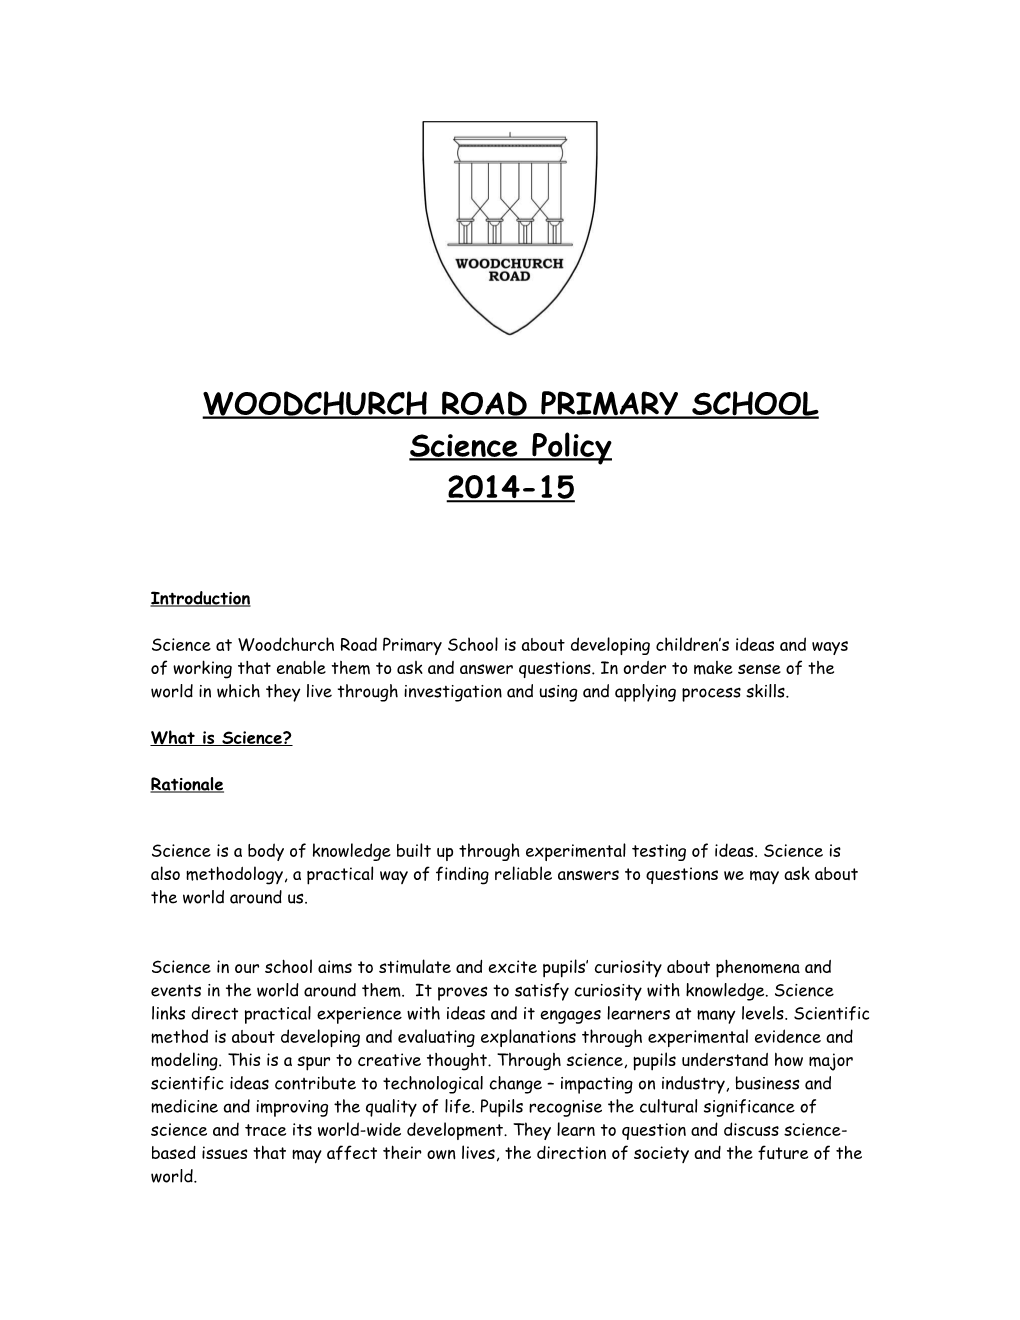 Woodchurch Road Primary School